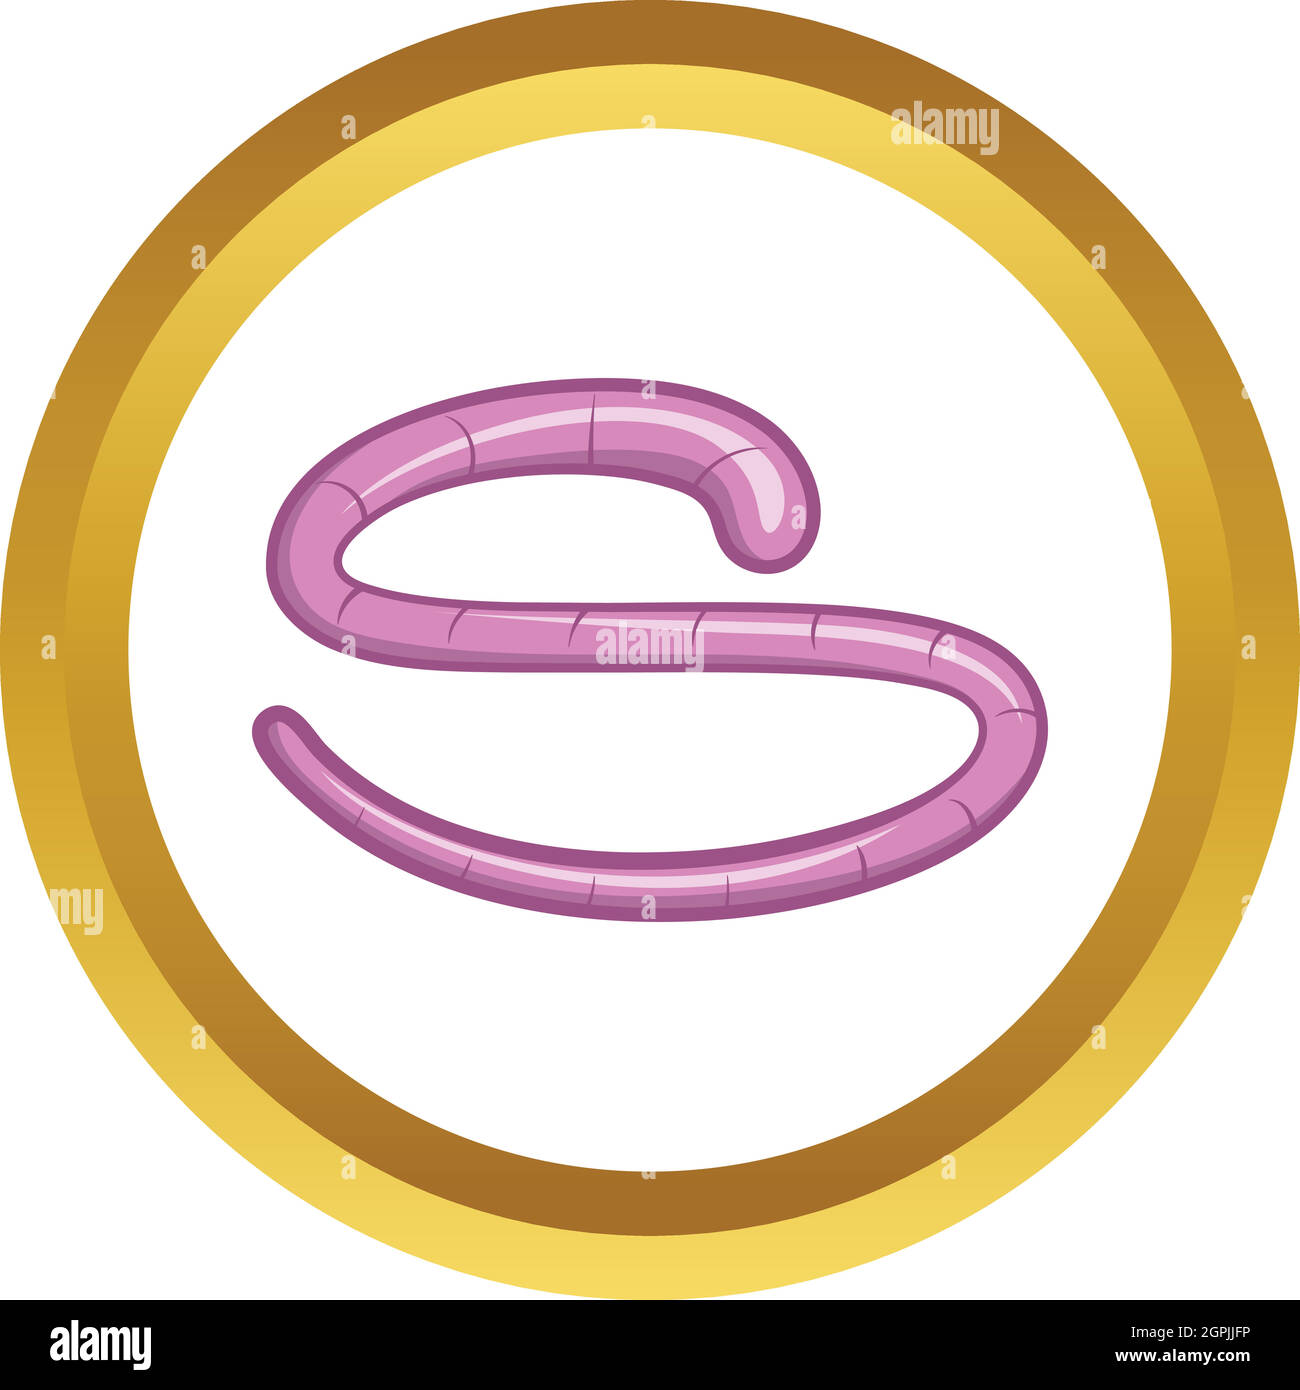 Roundworm vector icon Stock Vector